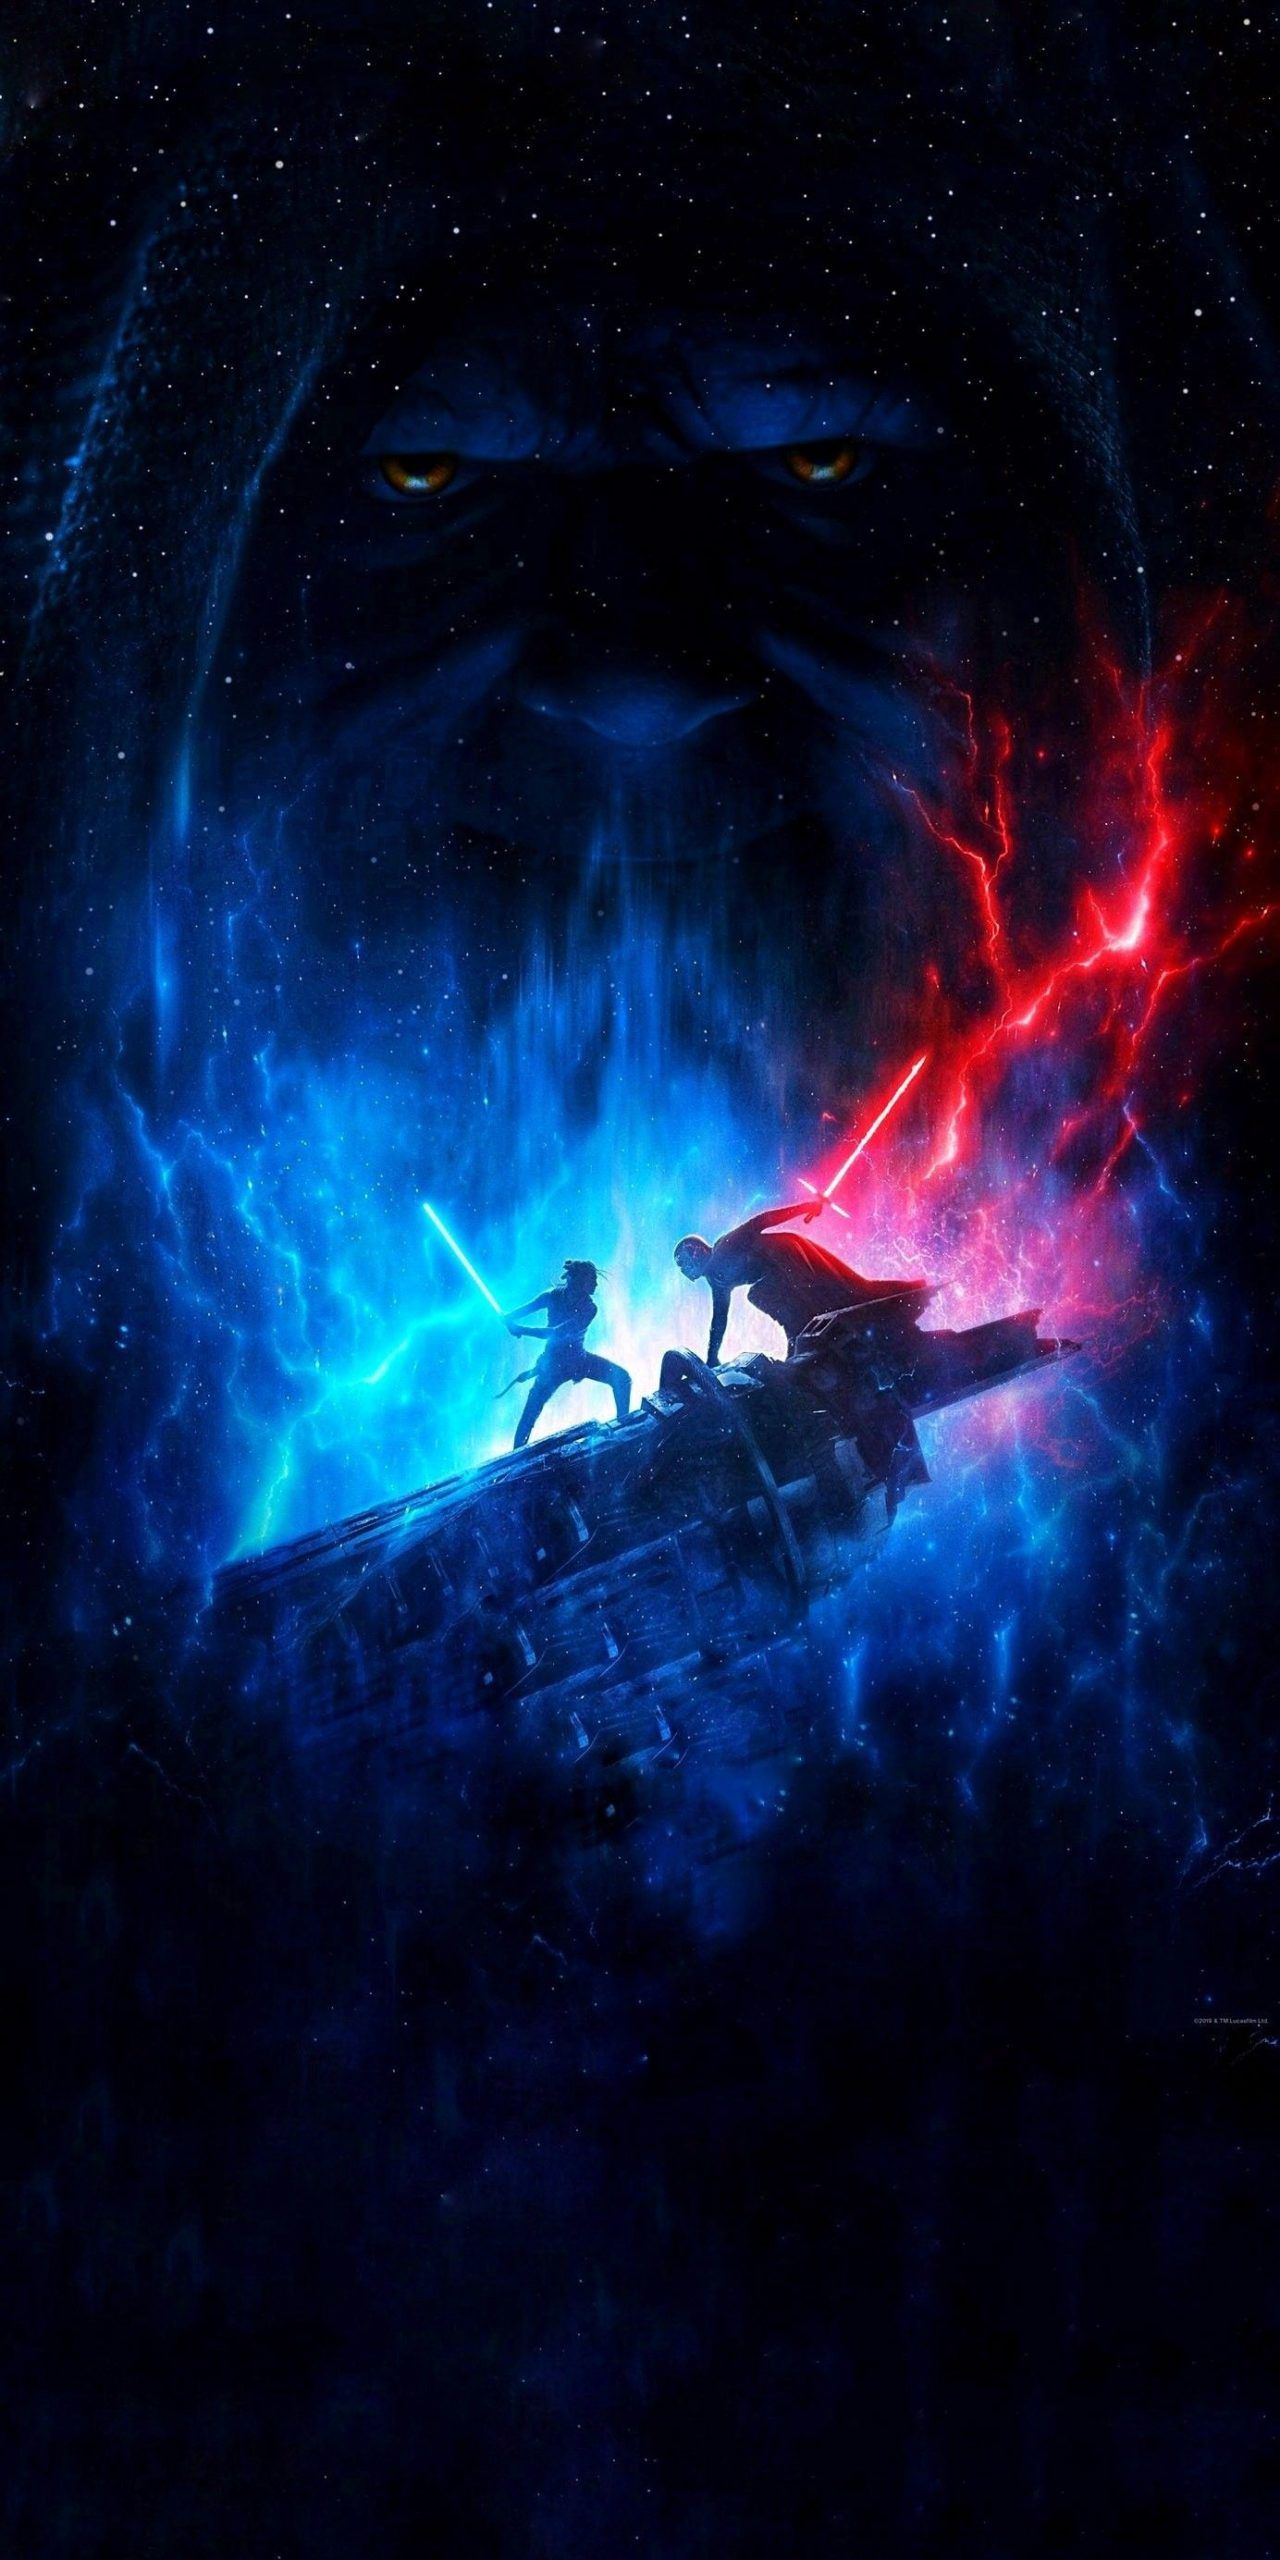 Star Wars The Rise of Skywalker by Lucasfilm, wallpaper edit